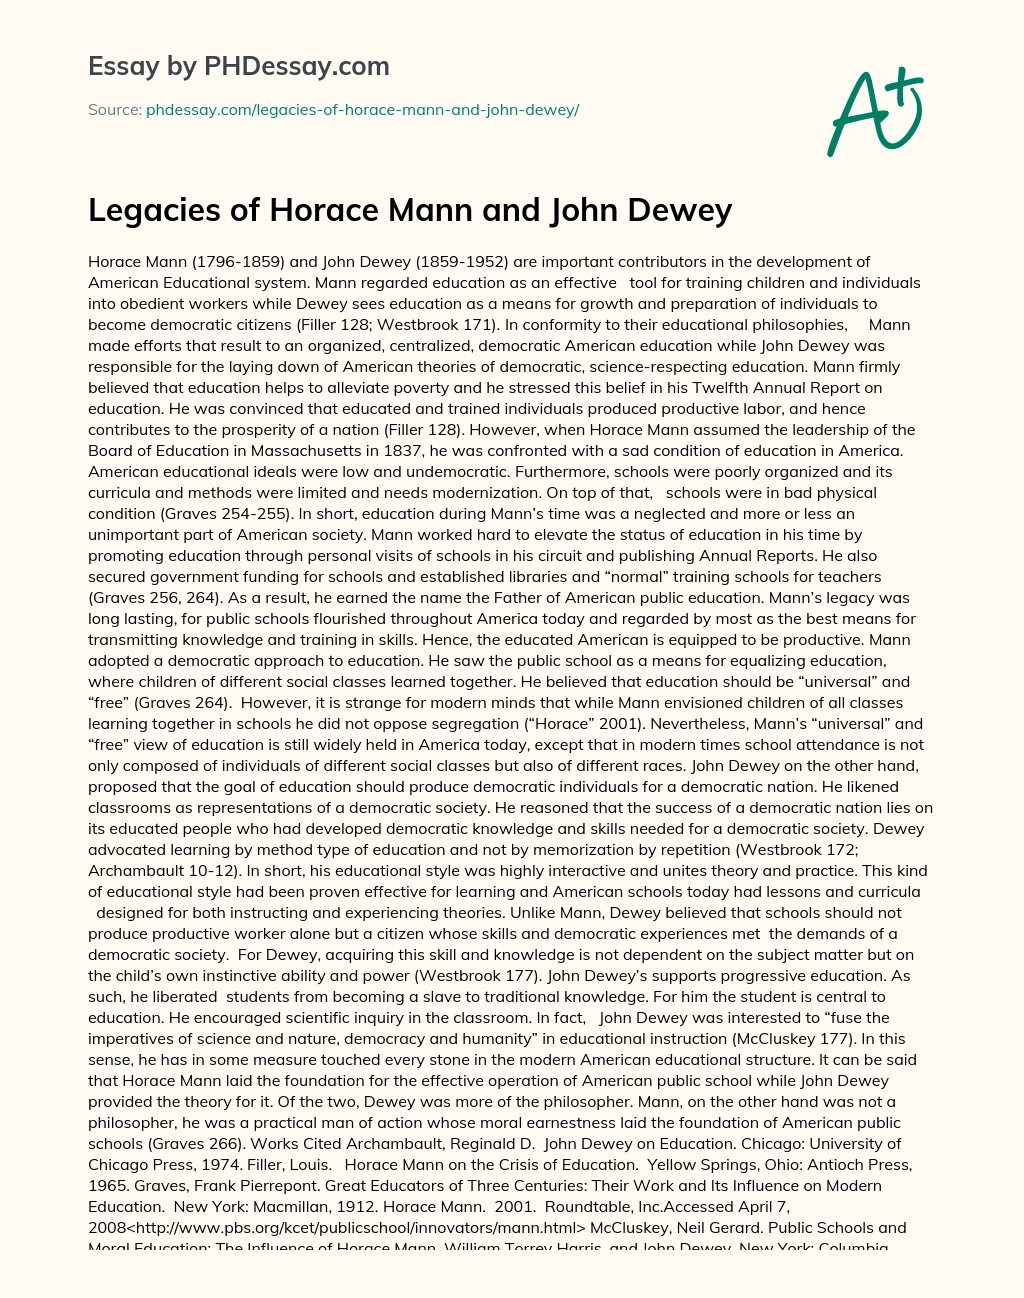 Legacies of Horace Mann and John Dewey essay